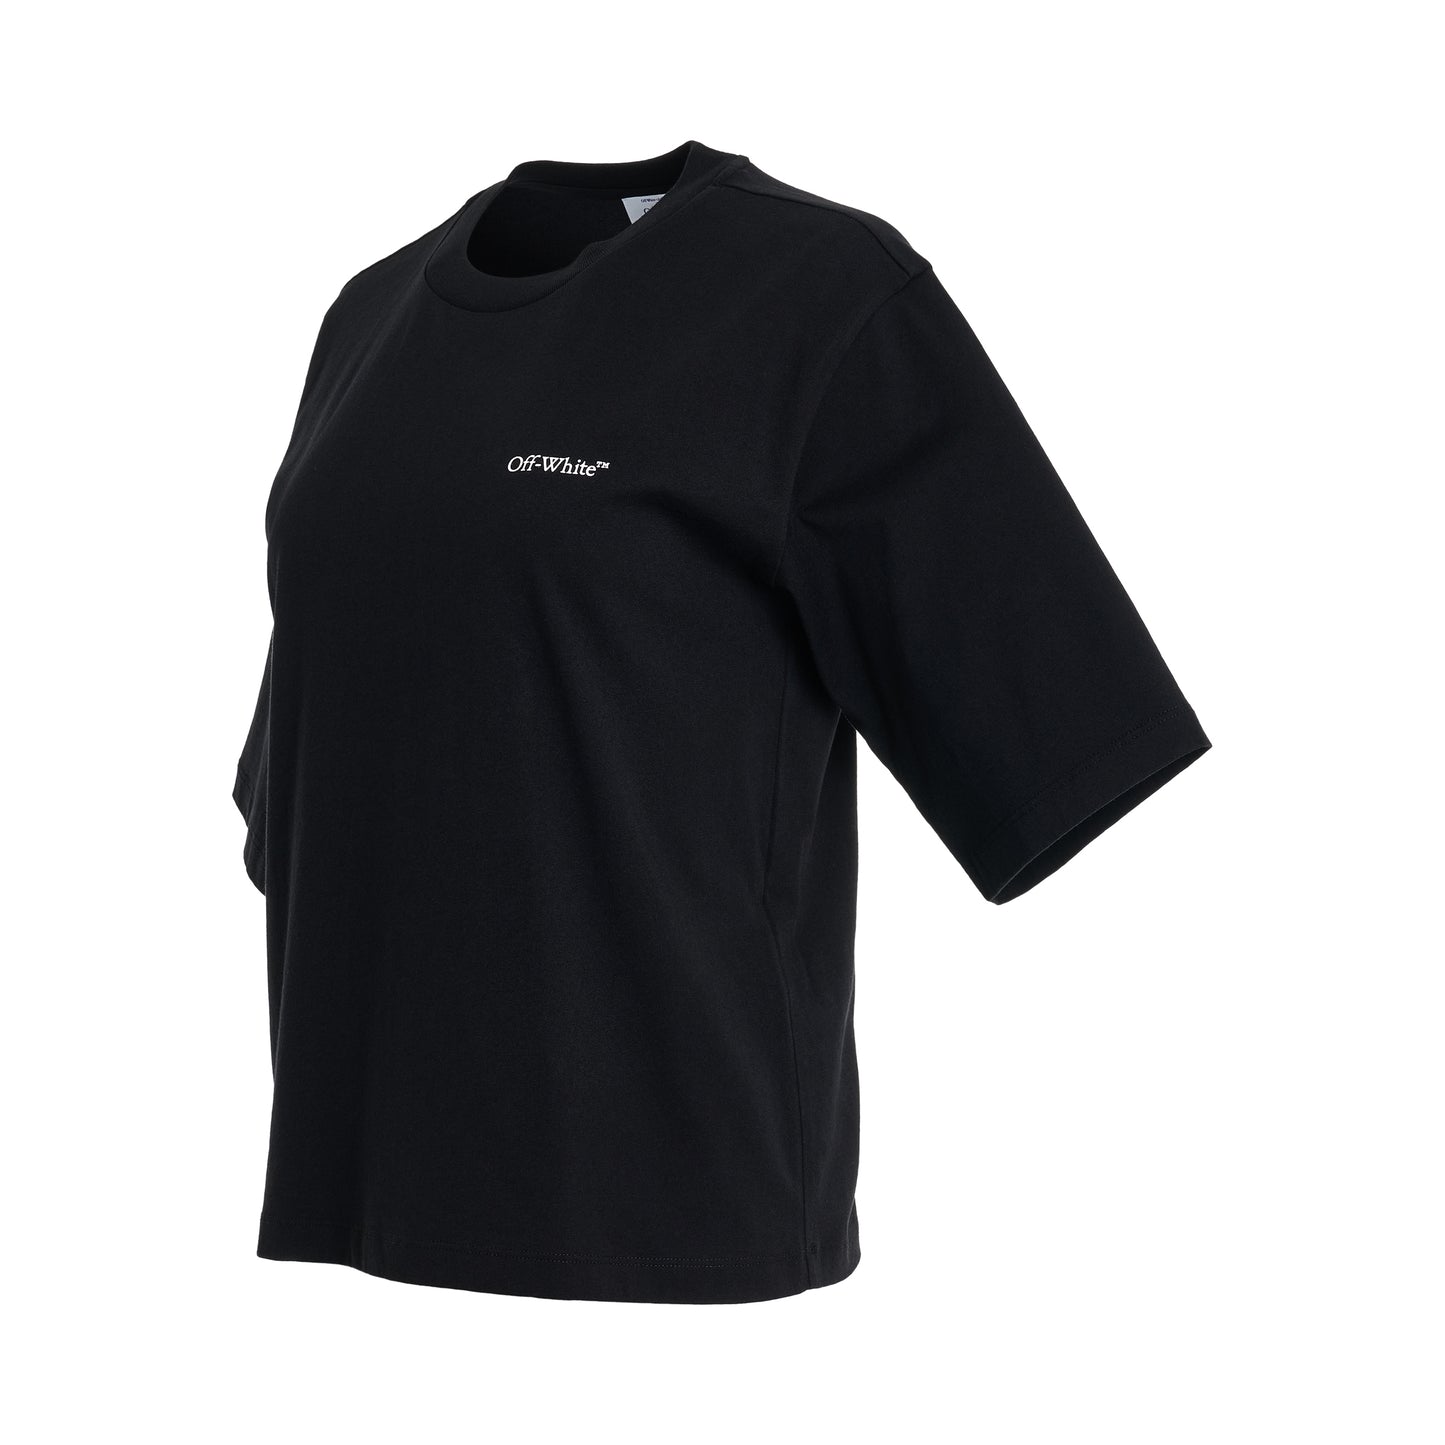 X-Ray Arrow Casual T-Shirt in Black/Multicolour